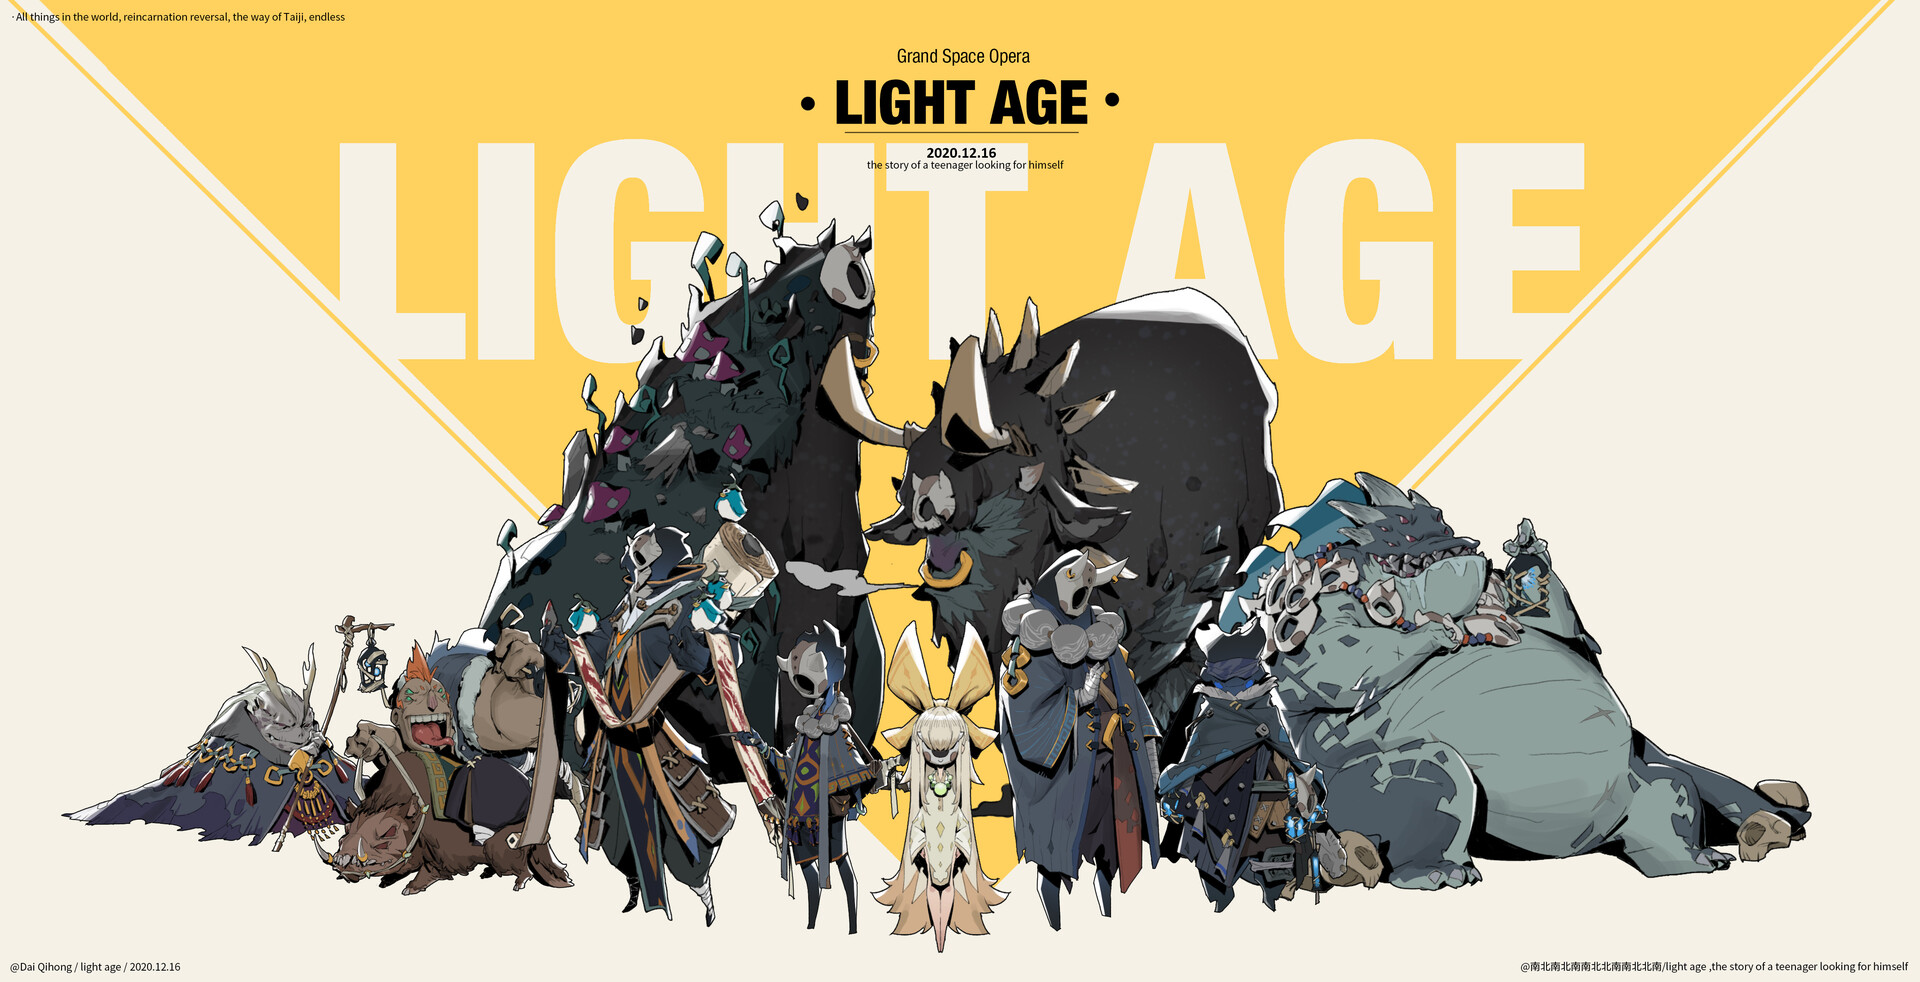 Lighter age